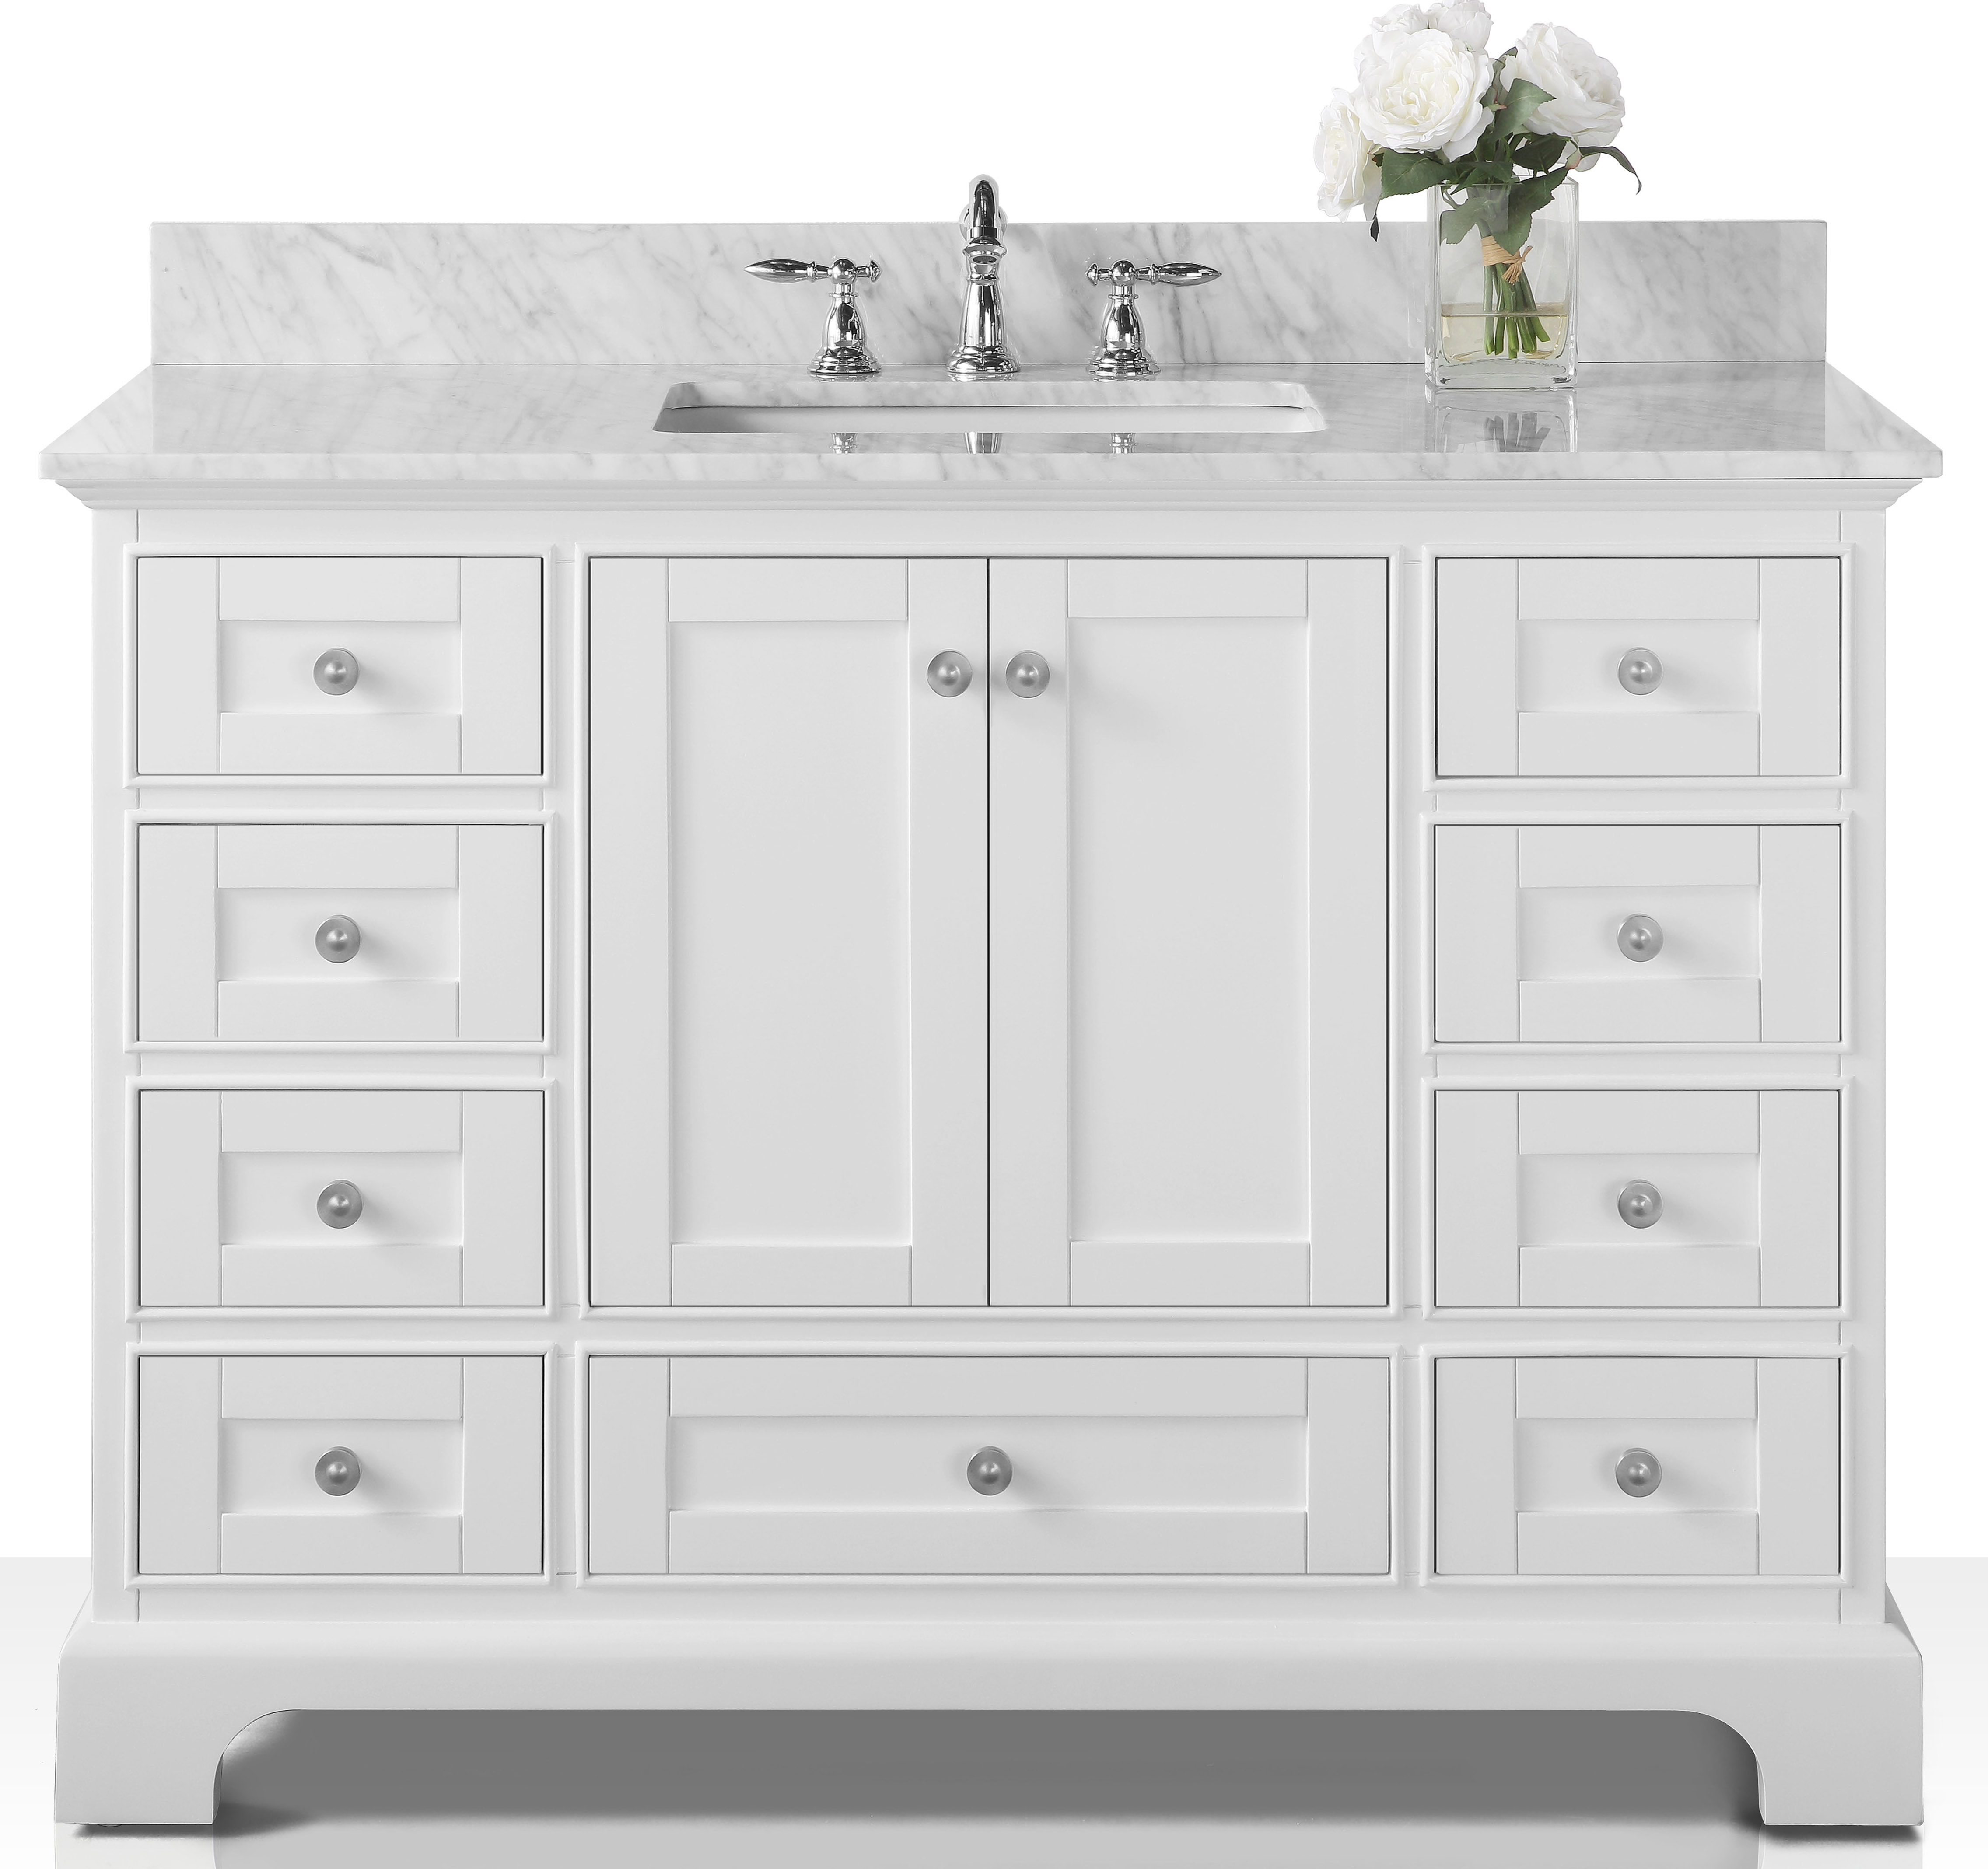 48" Bath Vanity Set in White with Italian Carrara White Marble Vanity Top and White Undermount Basin Mirror Options